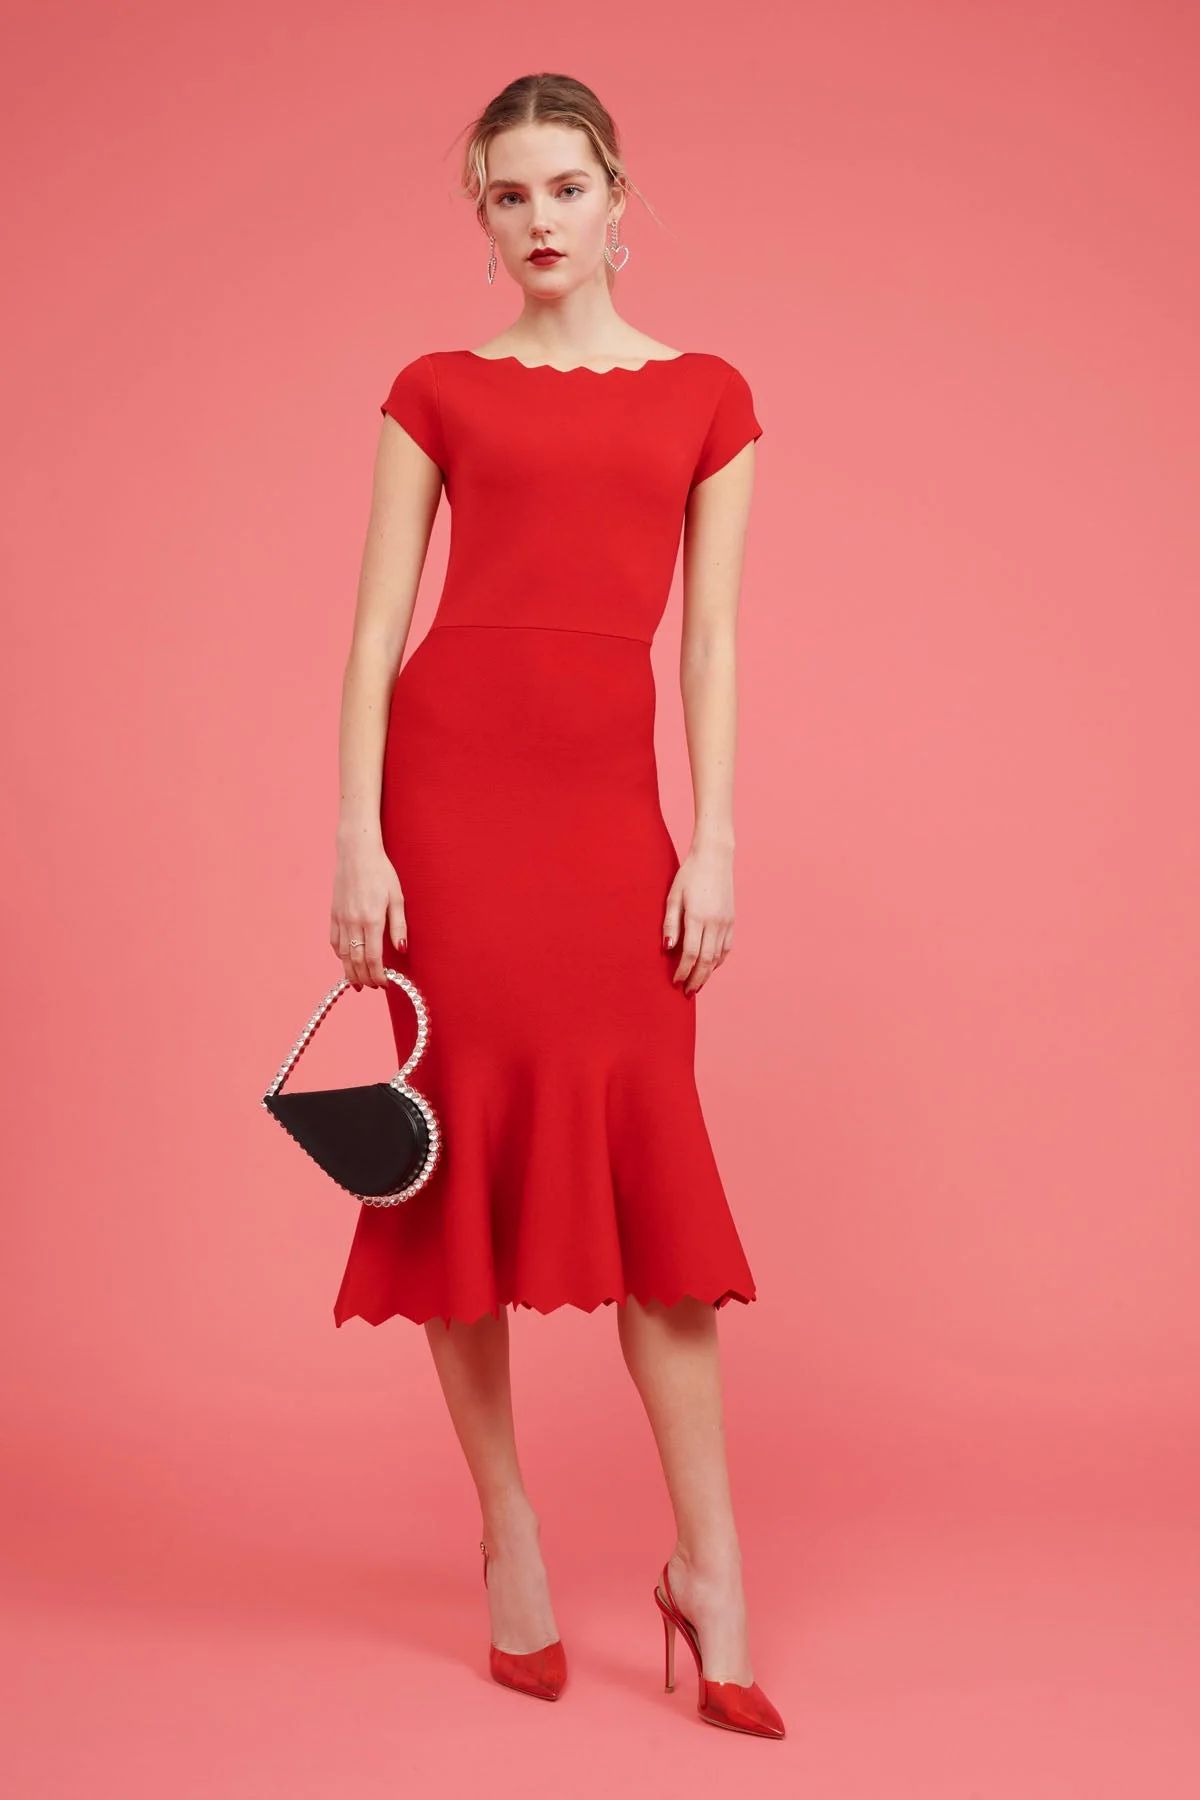 Stretch Knit Sheath Dress with Peplum Hem - Red | Rachel Parcell